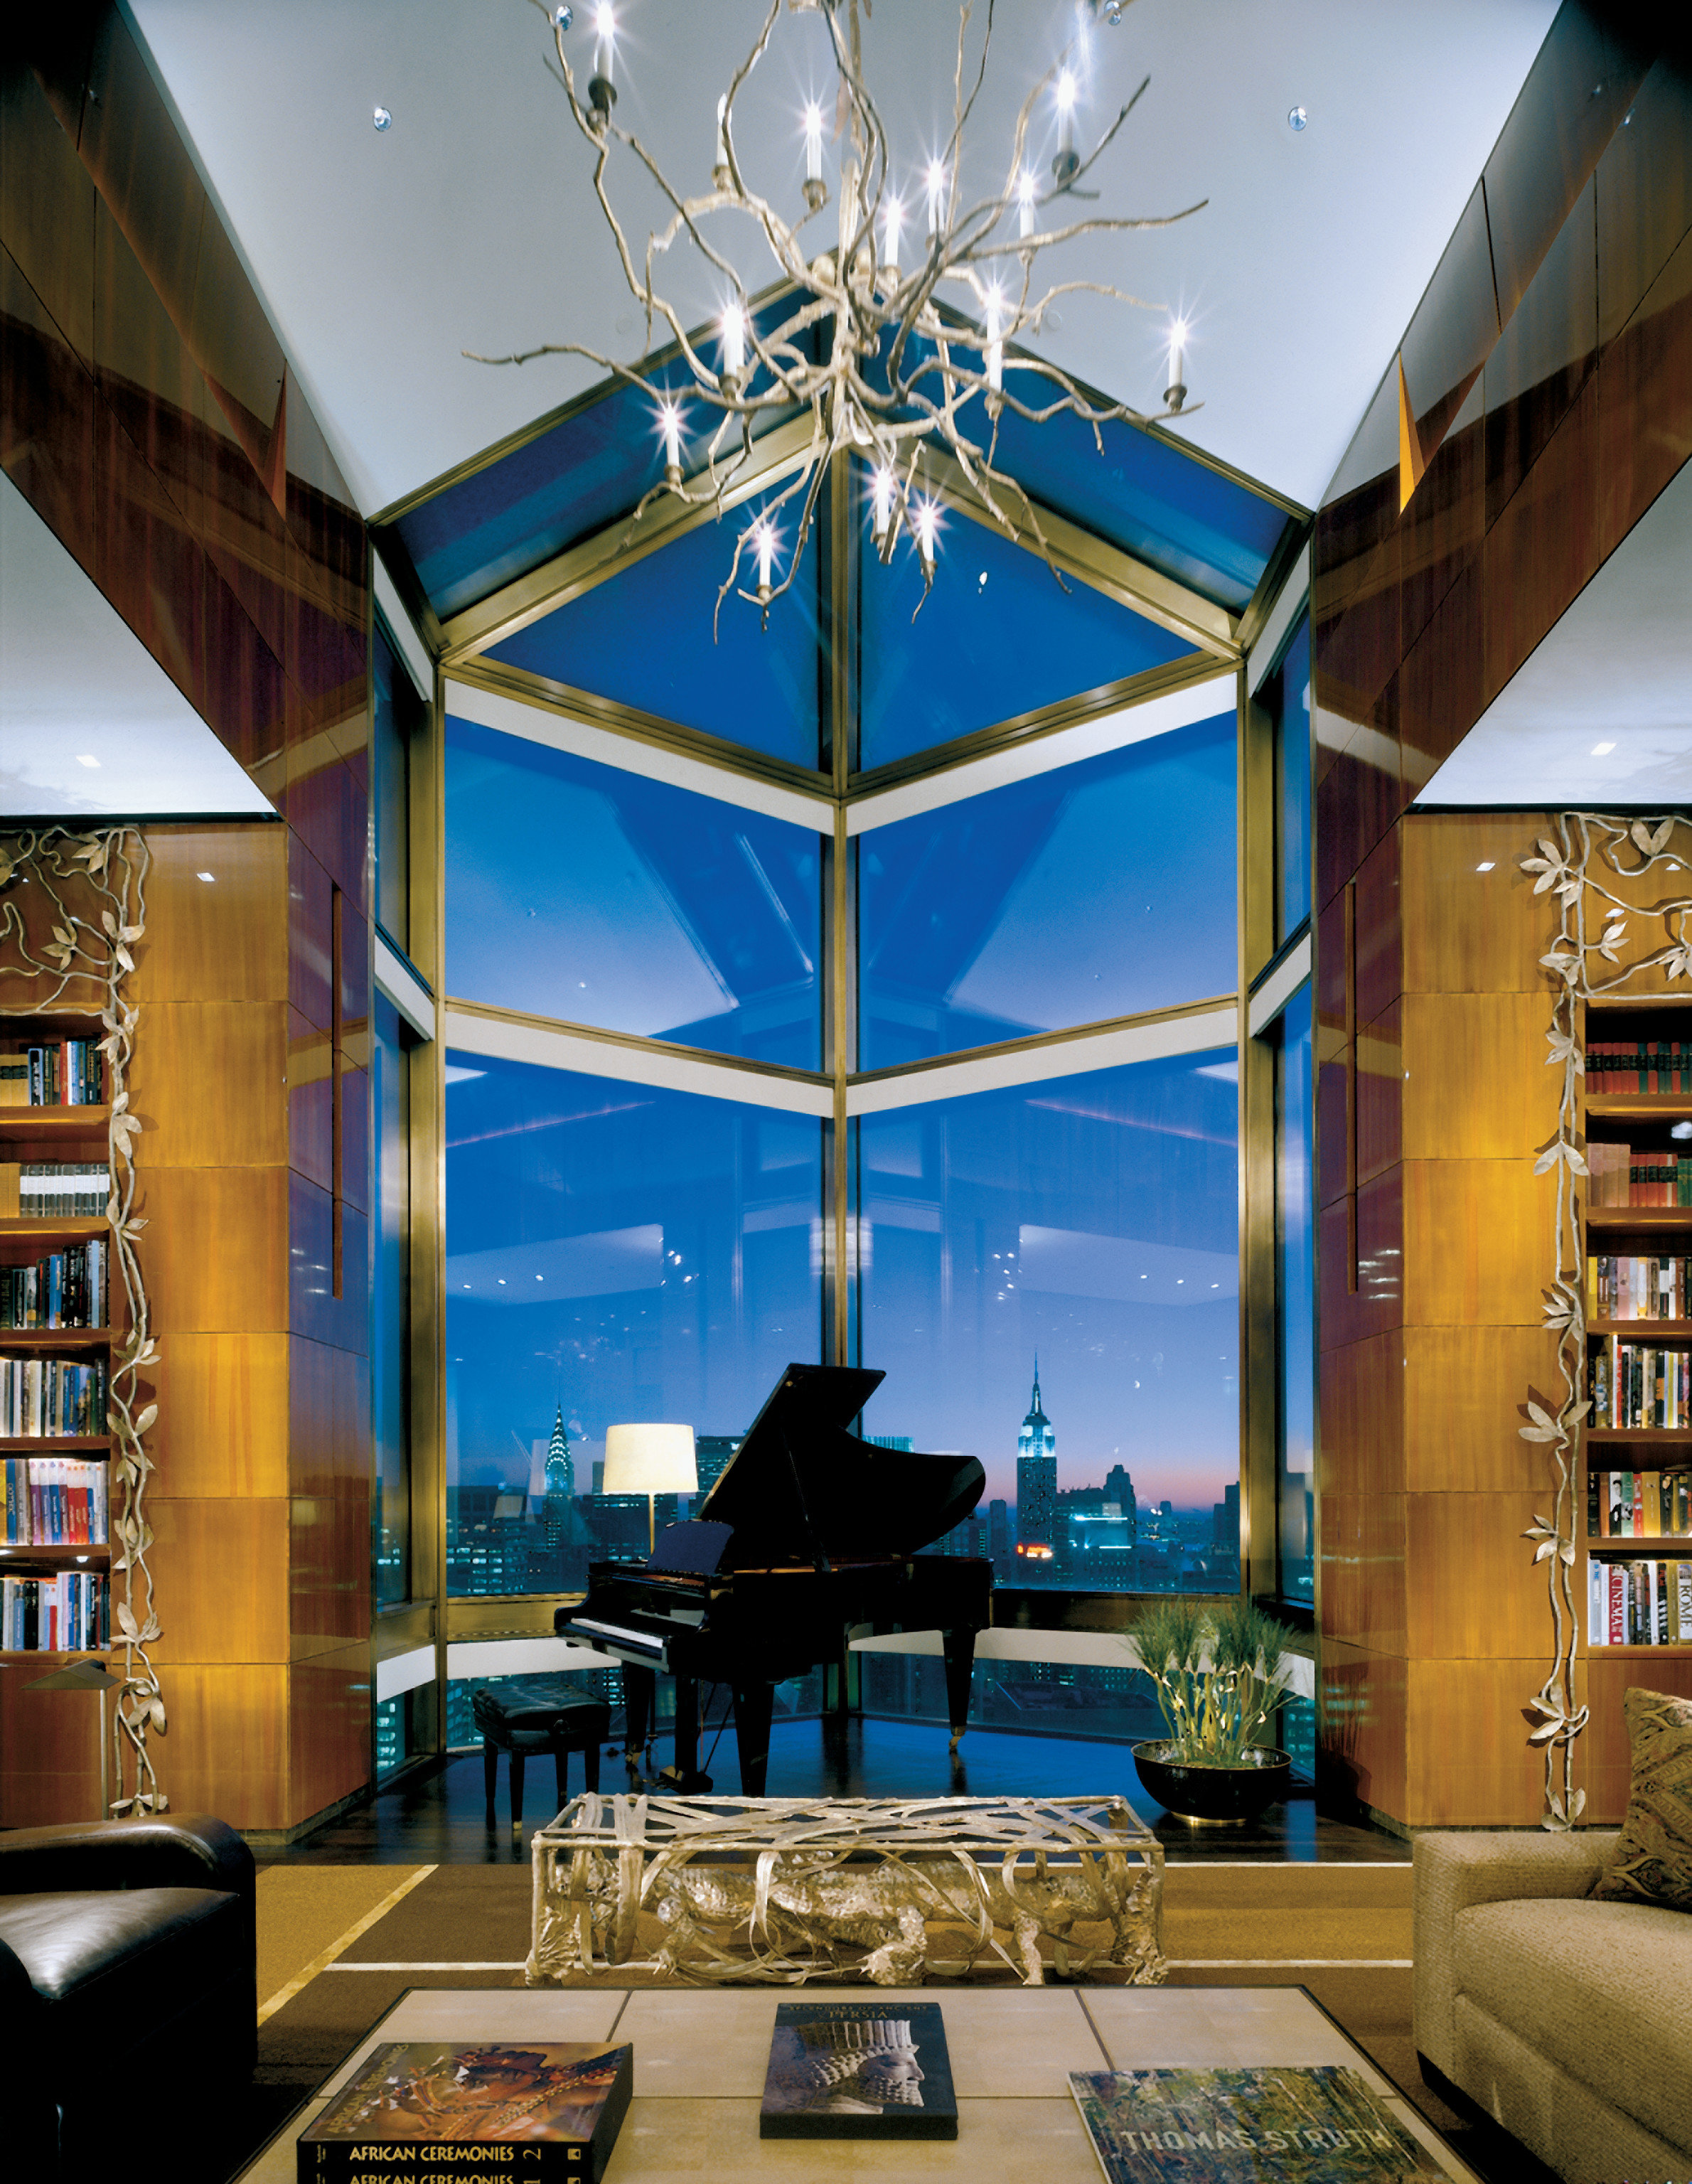 Hotels Luxury Travel indoor ceiling interior design Lobby living room daylighting window condominium apartment